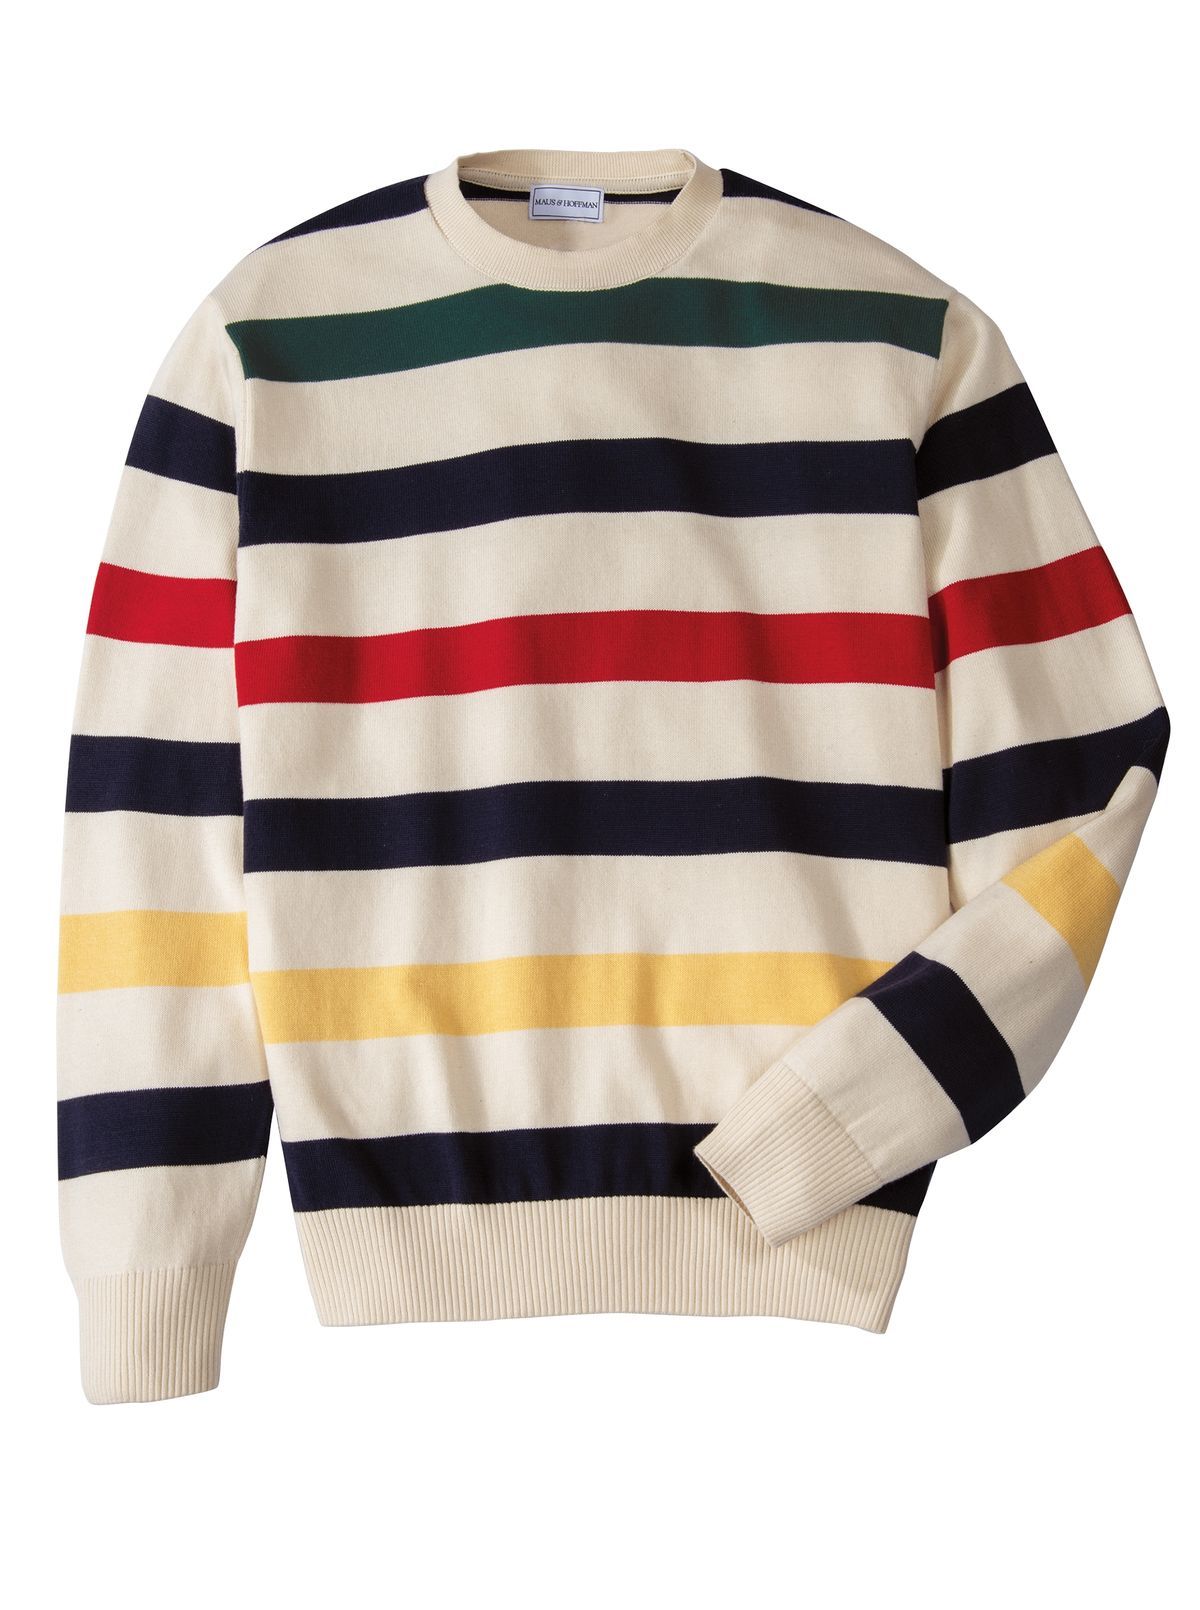 Lauderdale Cotton Crewneck Sweater - Maus & Hoffman